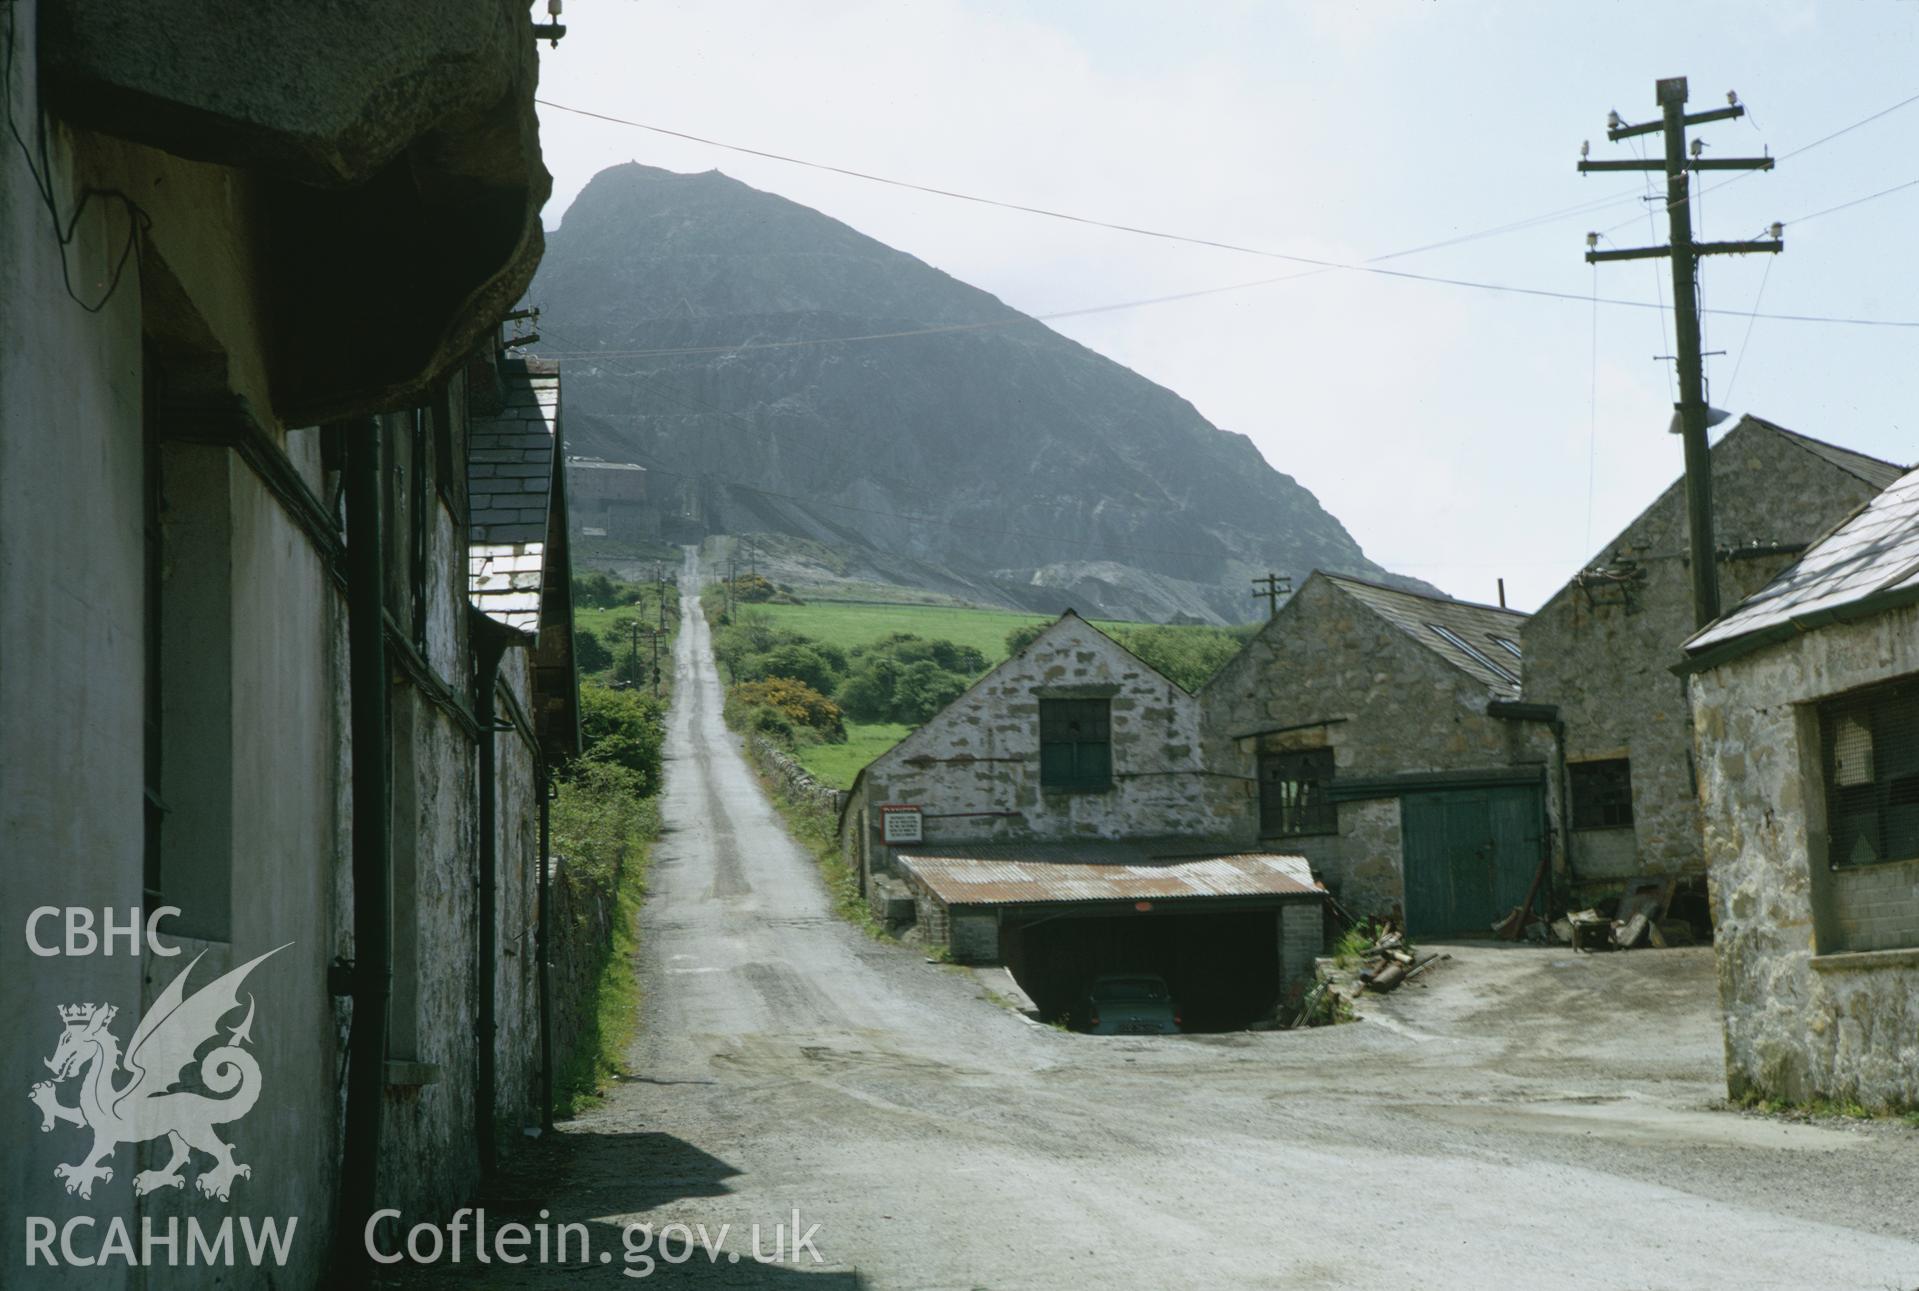 35mm colour slide showing Trefor Quarry, Caernarvonshire by Dylan Roberts.